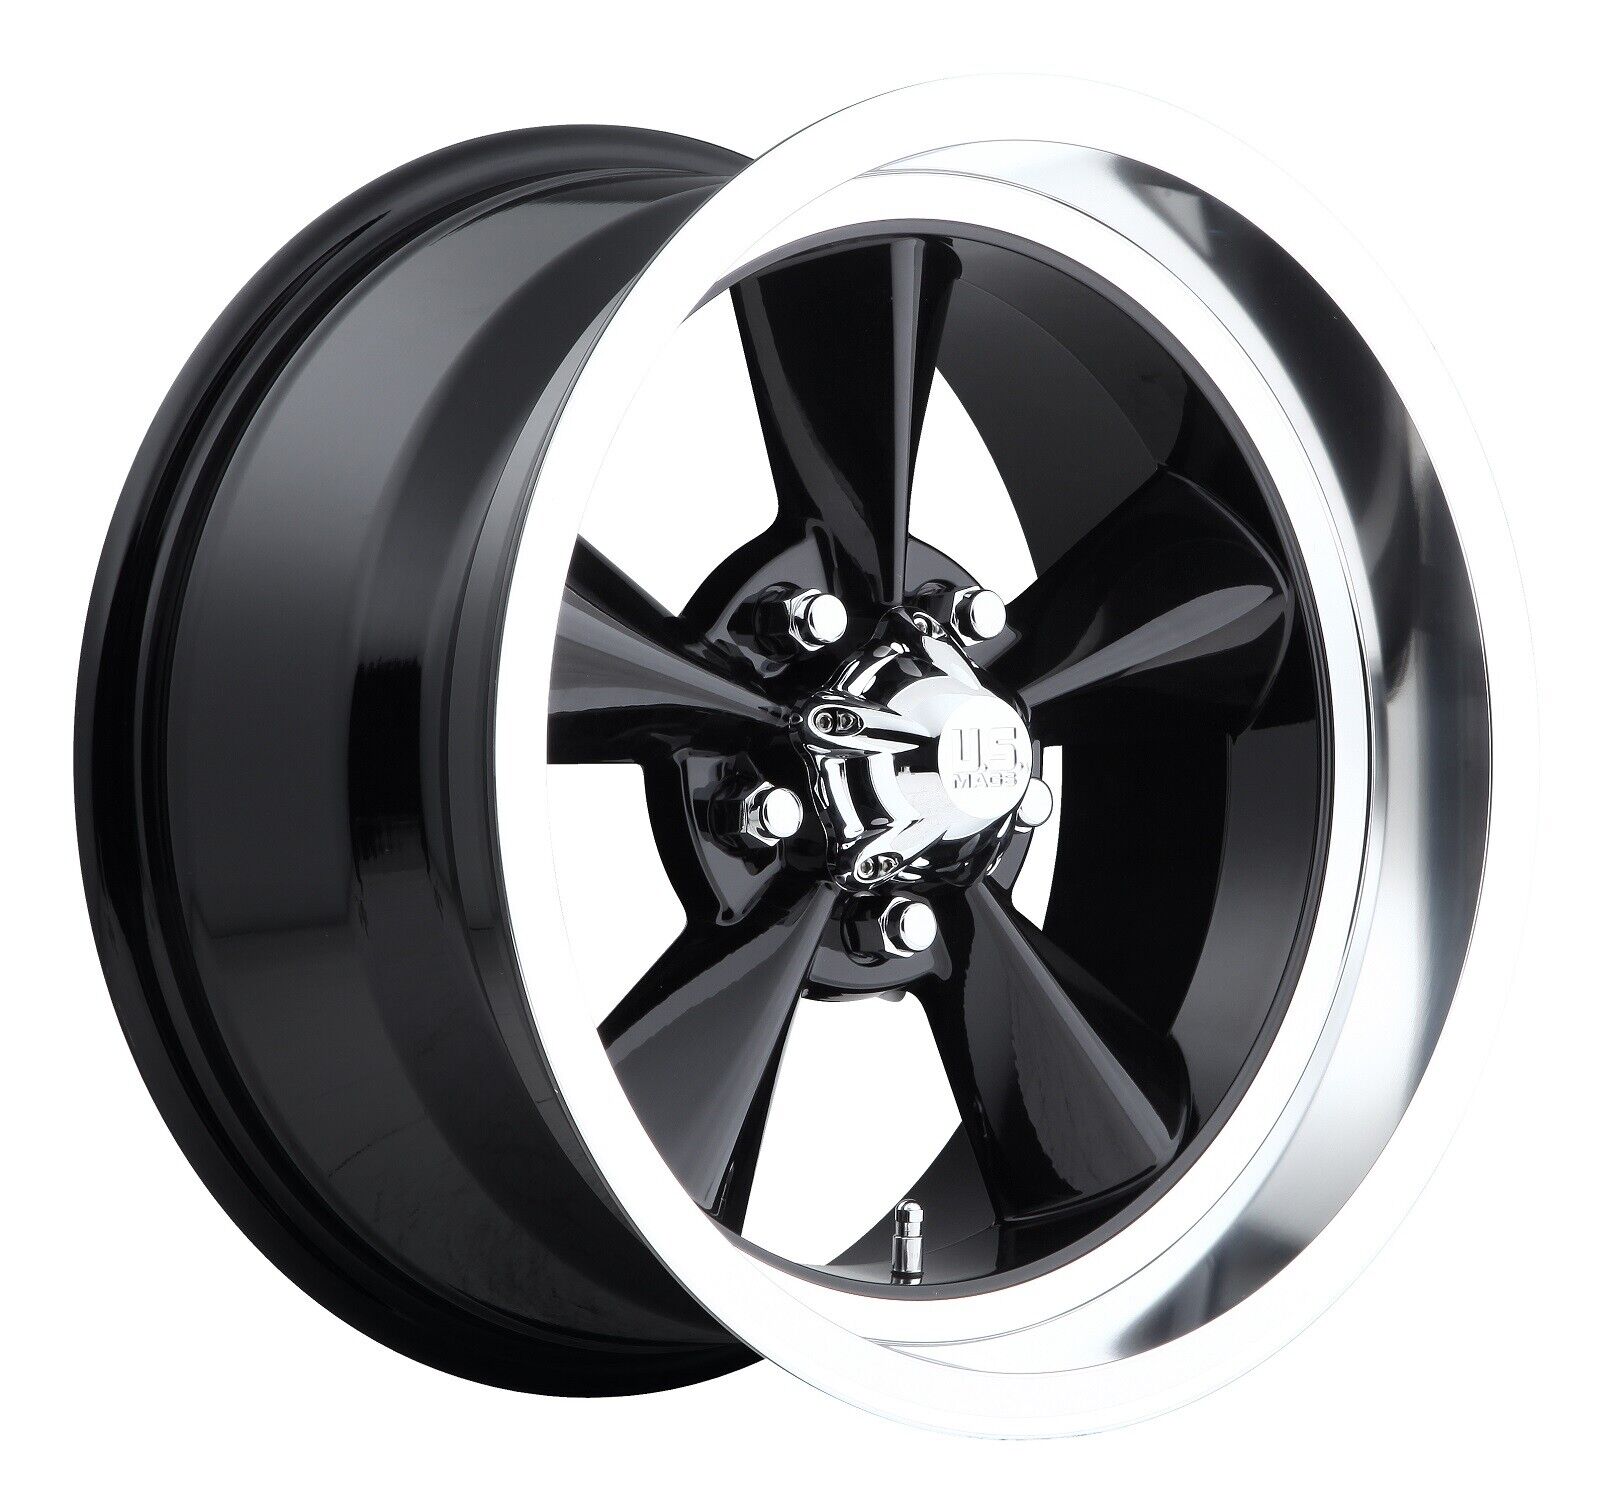 CPP US Mags U107 Standard wheels 17x7 + 17x8 fits: CHEVY S10 BLAZER SONOMA